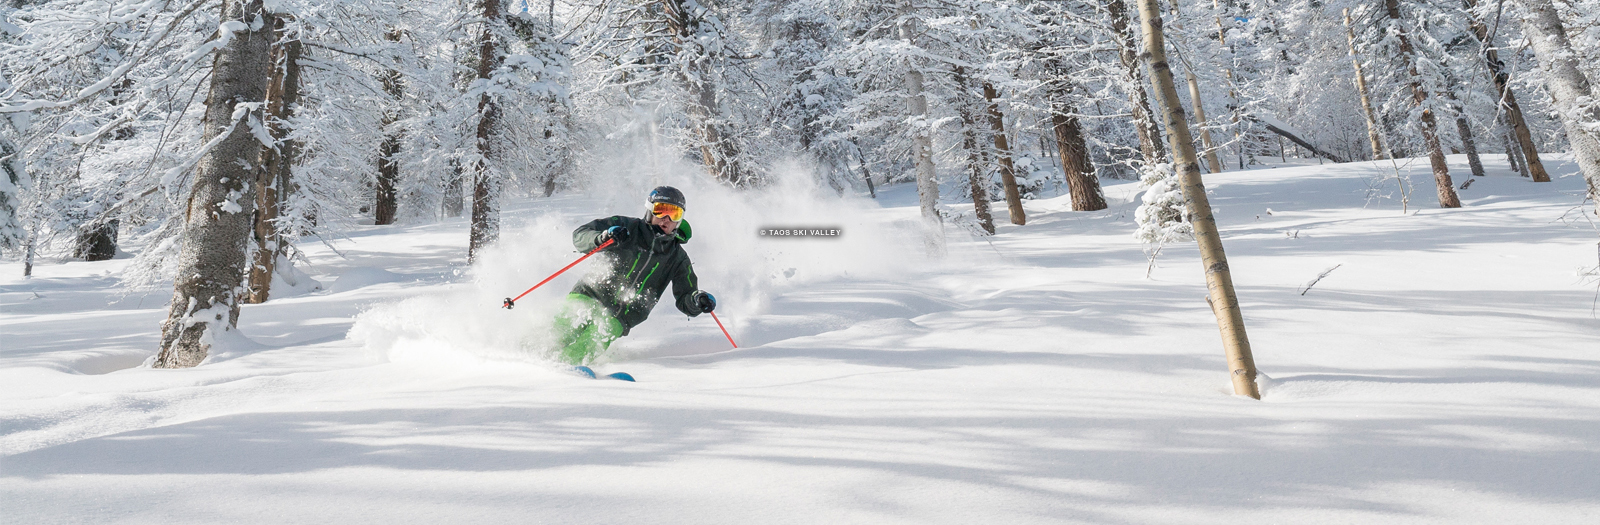 taos beginner skiing